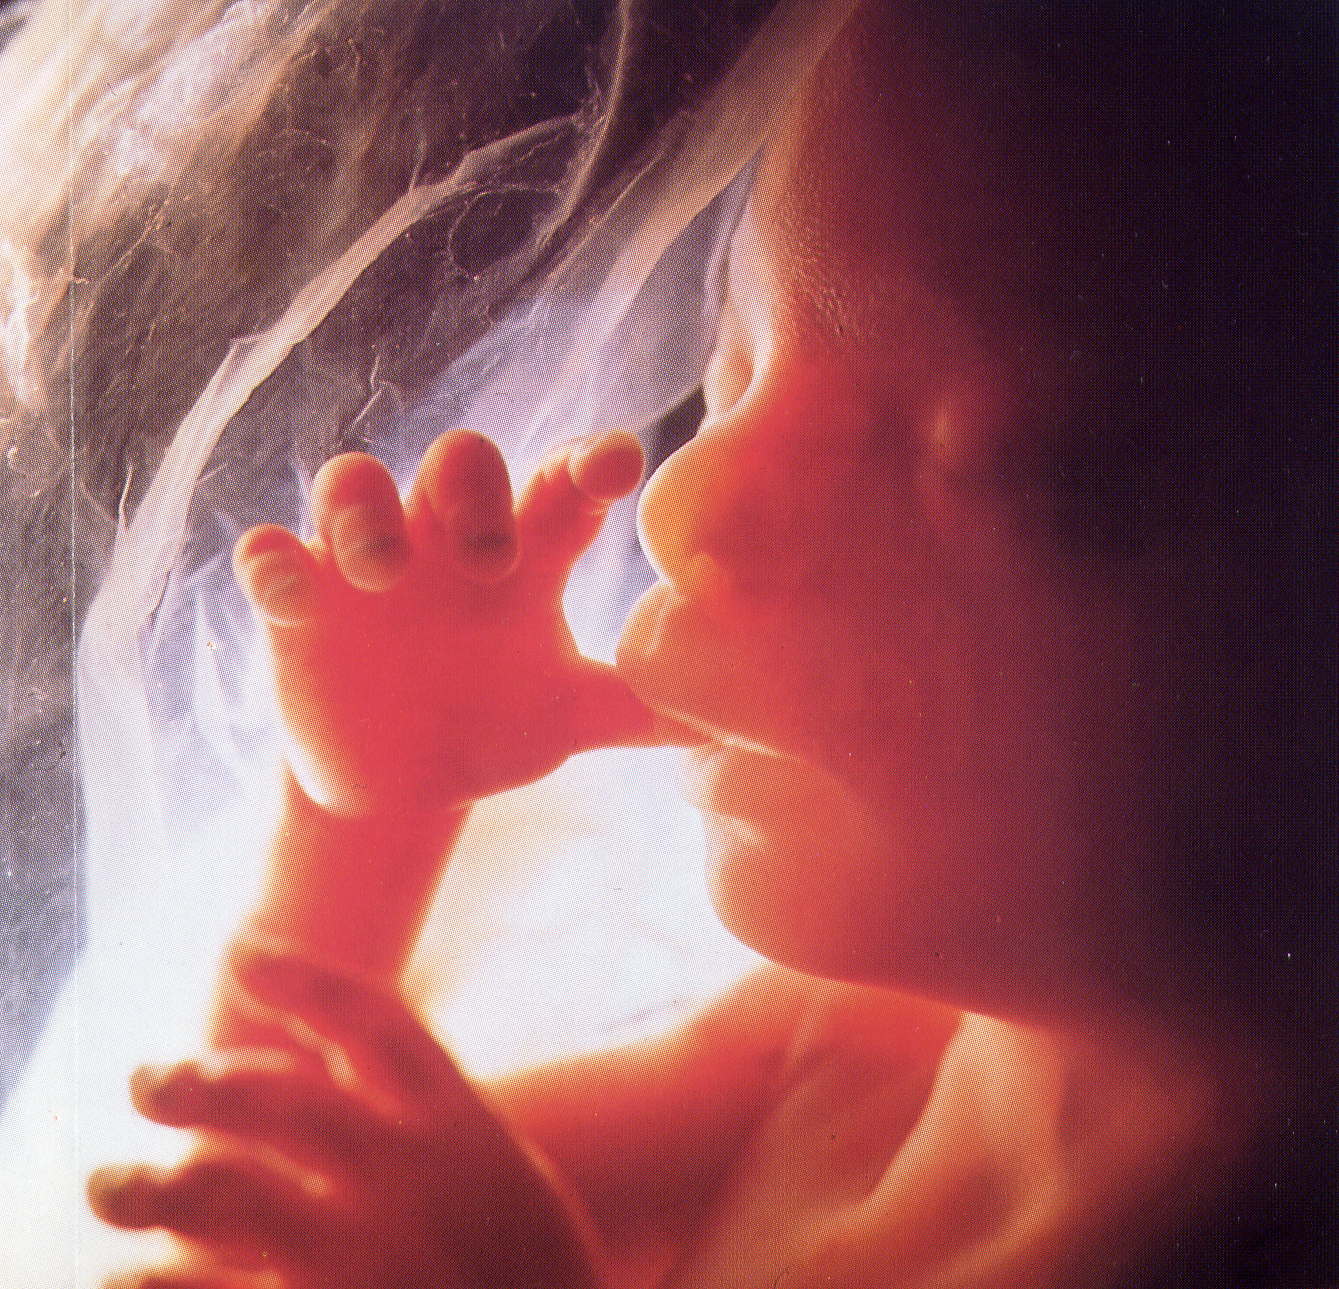 babies in womb